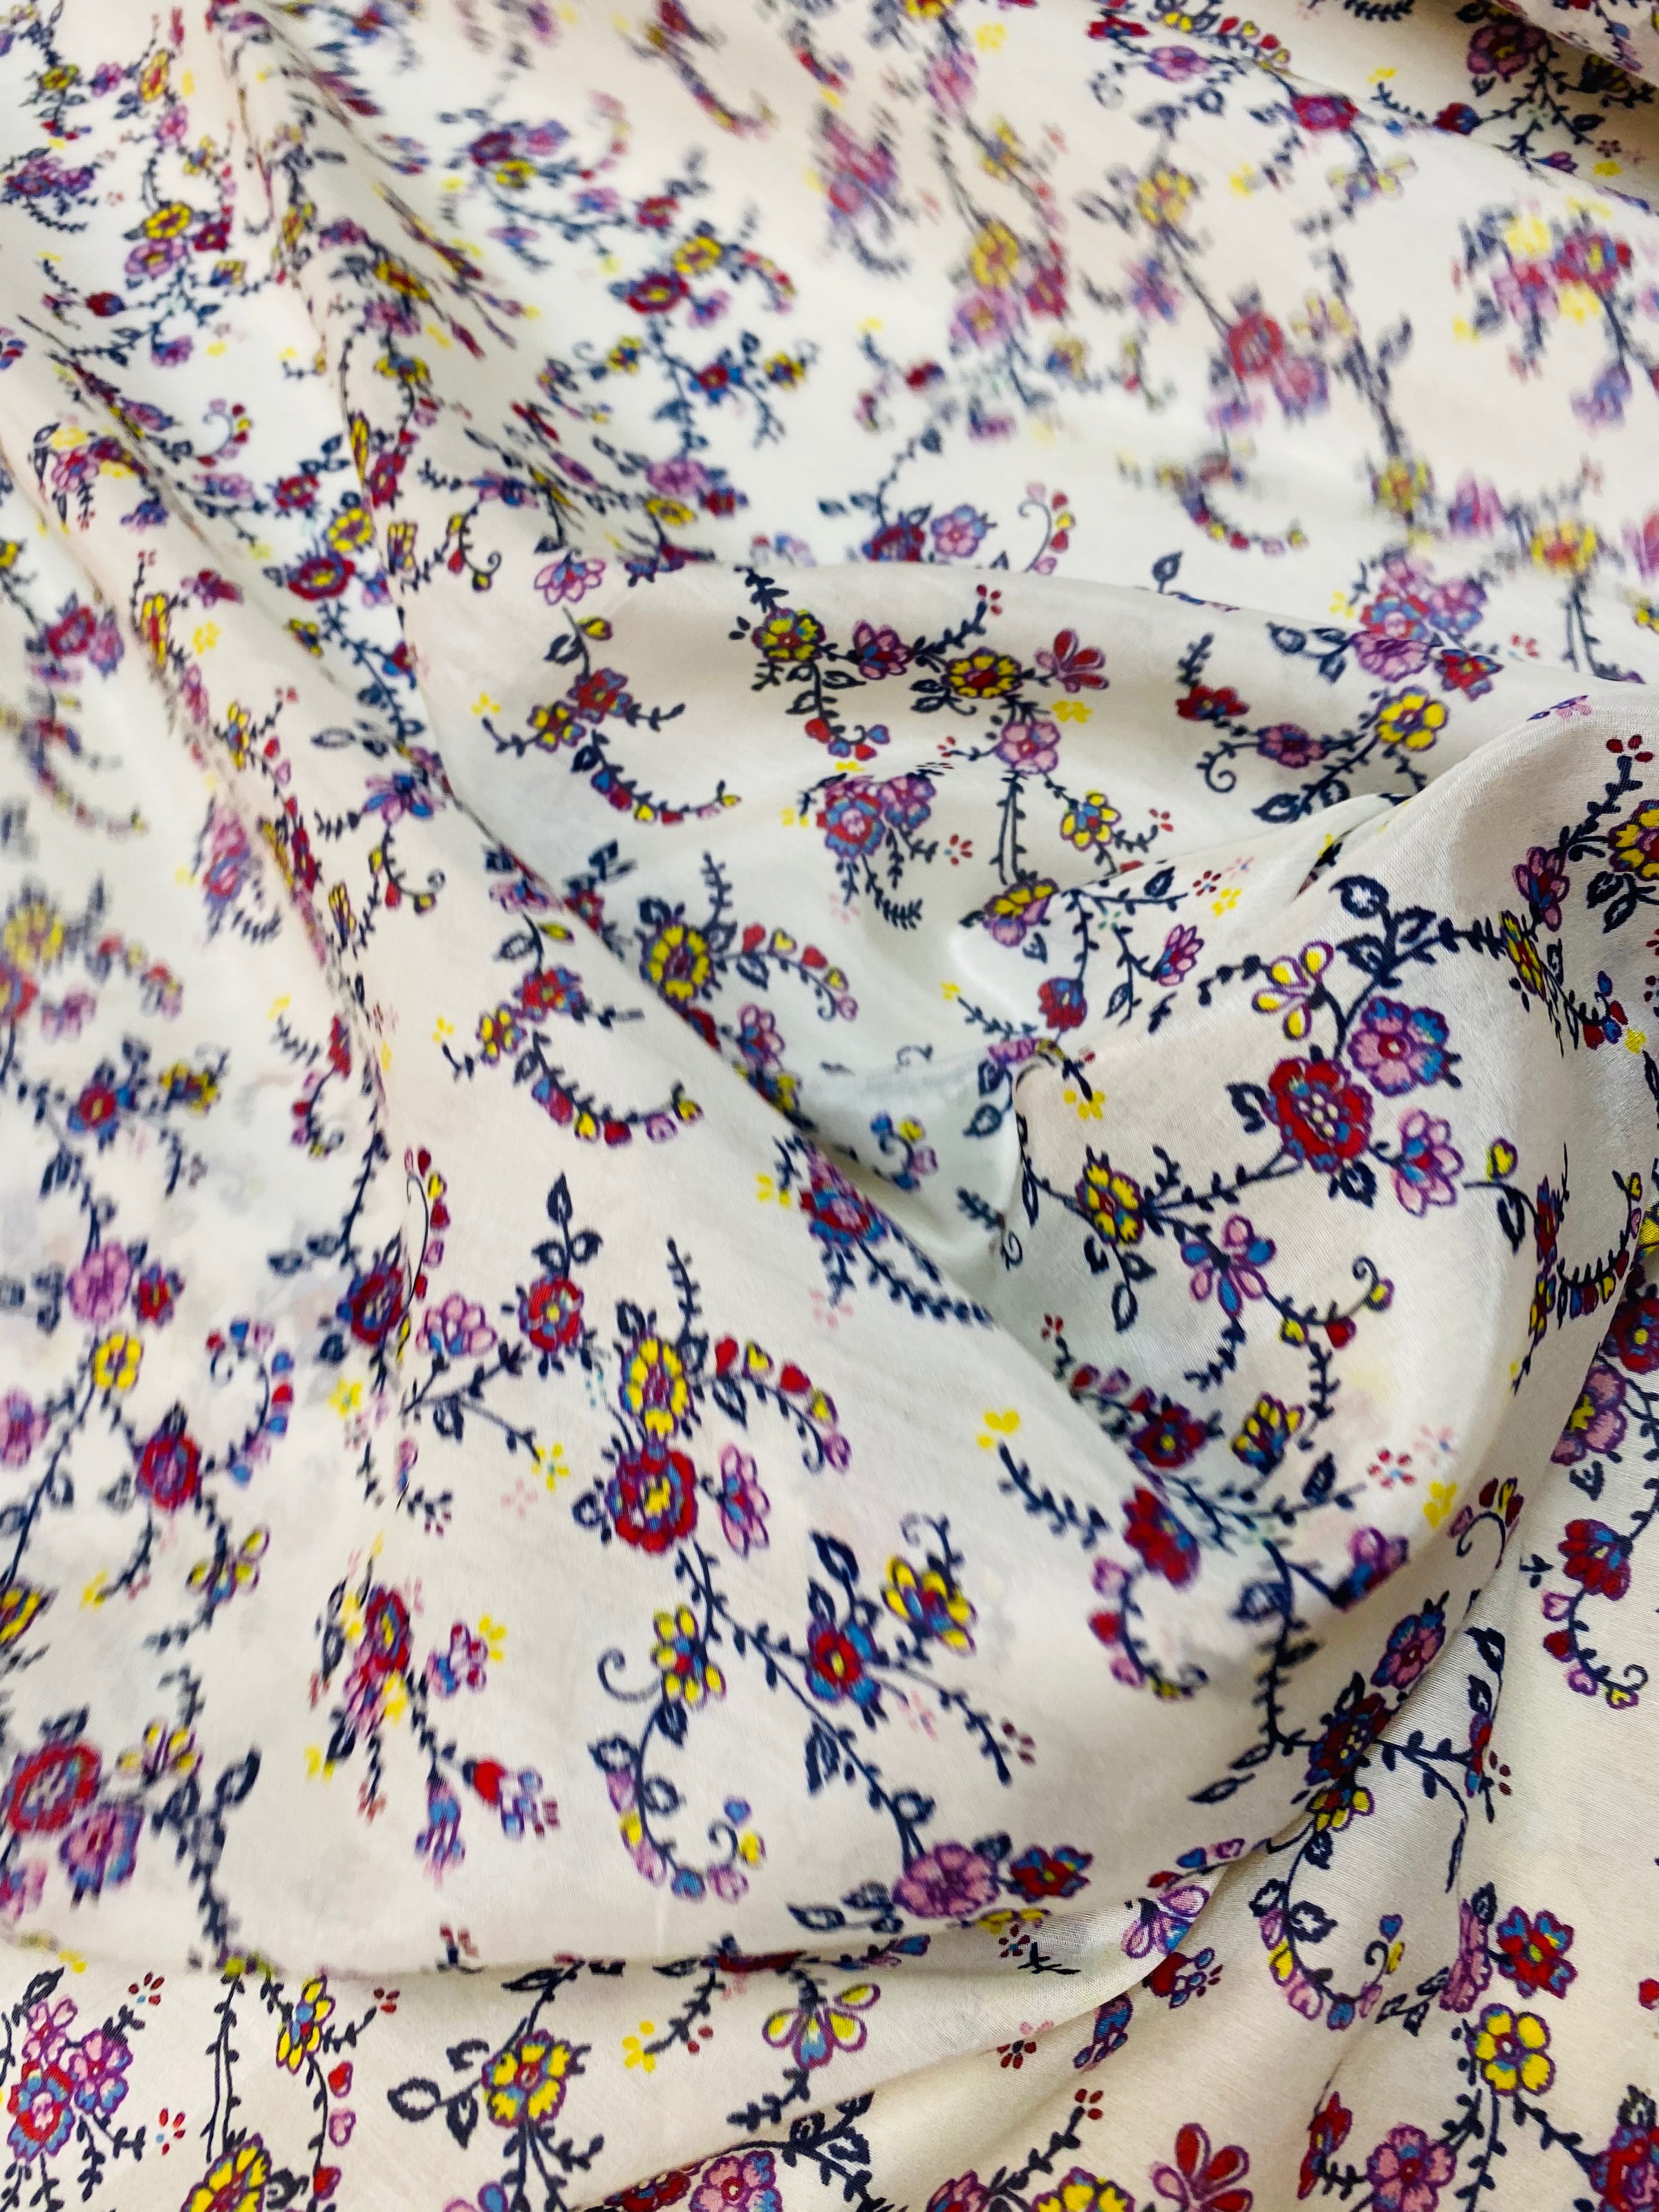 Jennfabric Soft White Floral Print Chiffon Fabric for Dress Shirts